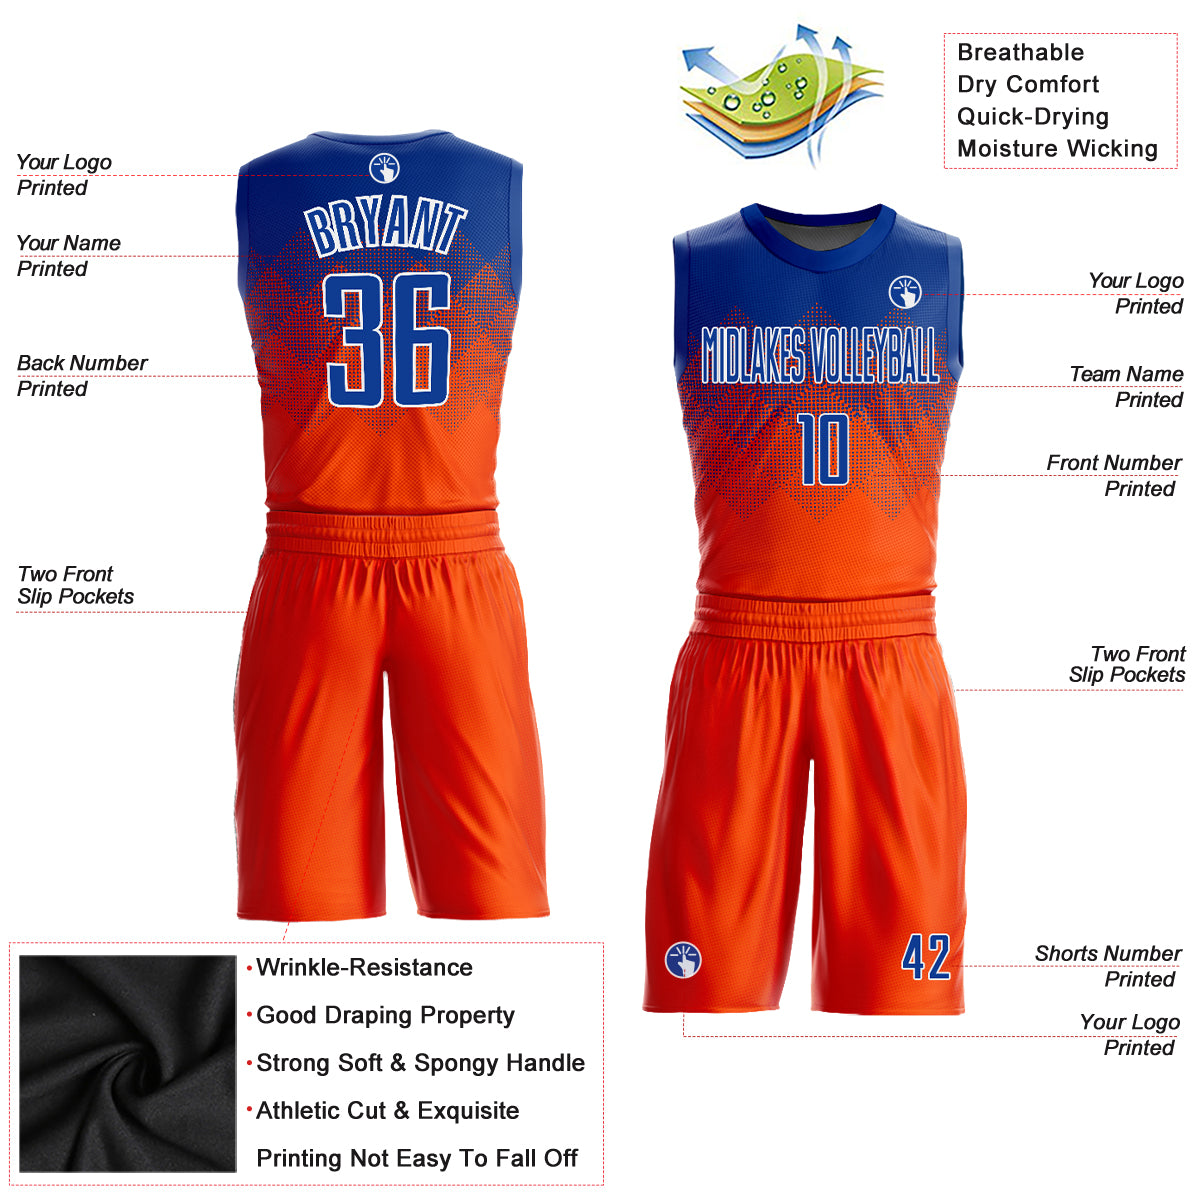 FANSIDEA Custom Basketball Jersey Orange Royal-White Round Neck Sublimation Basketball Suit Jersey Men's Size:M